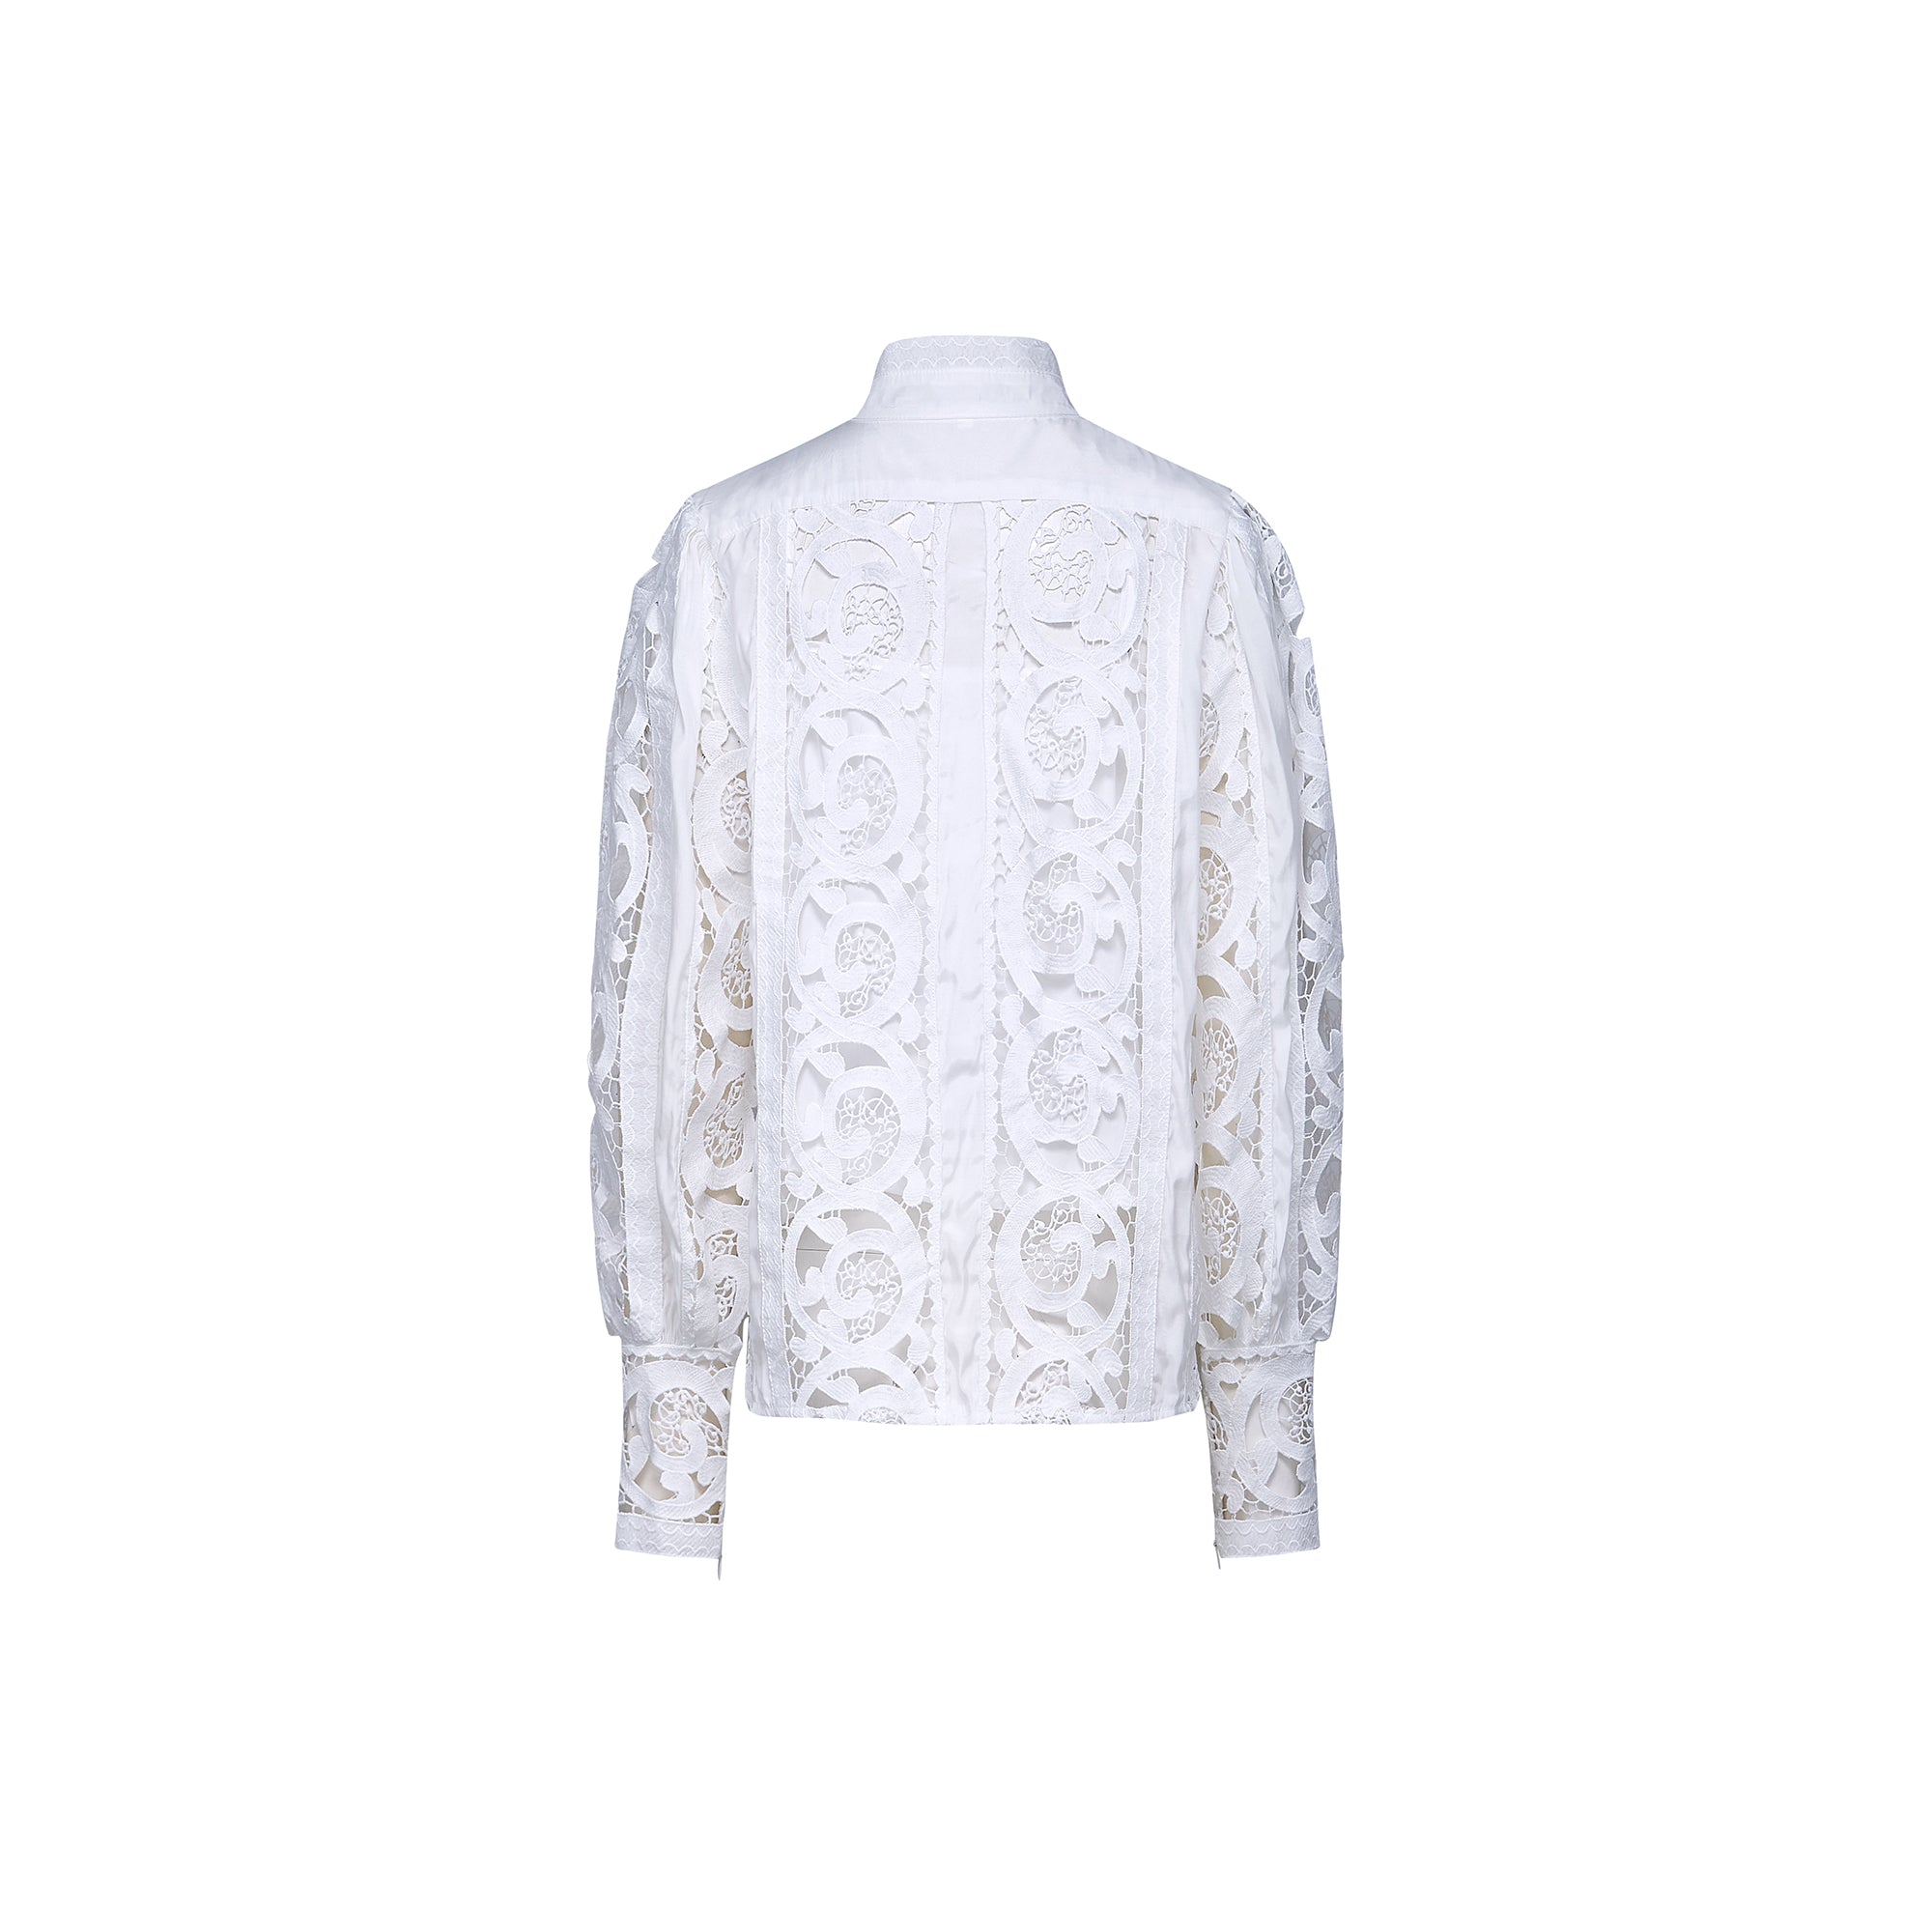 Marie lace-floral embellished shirt & skirt matching set